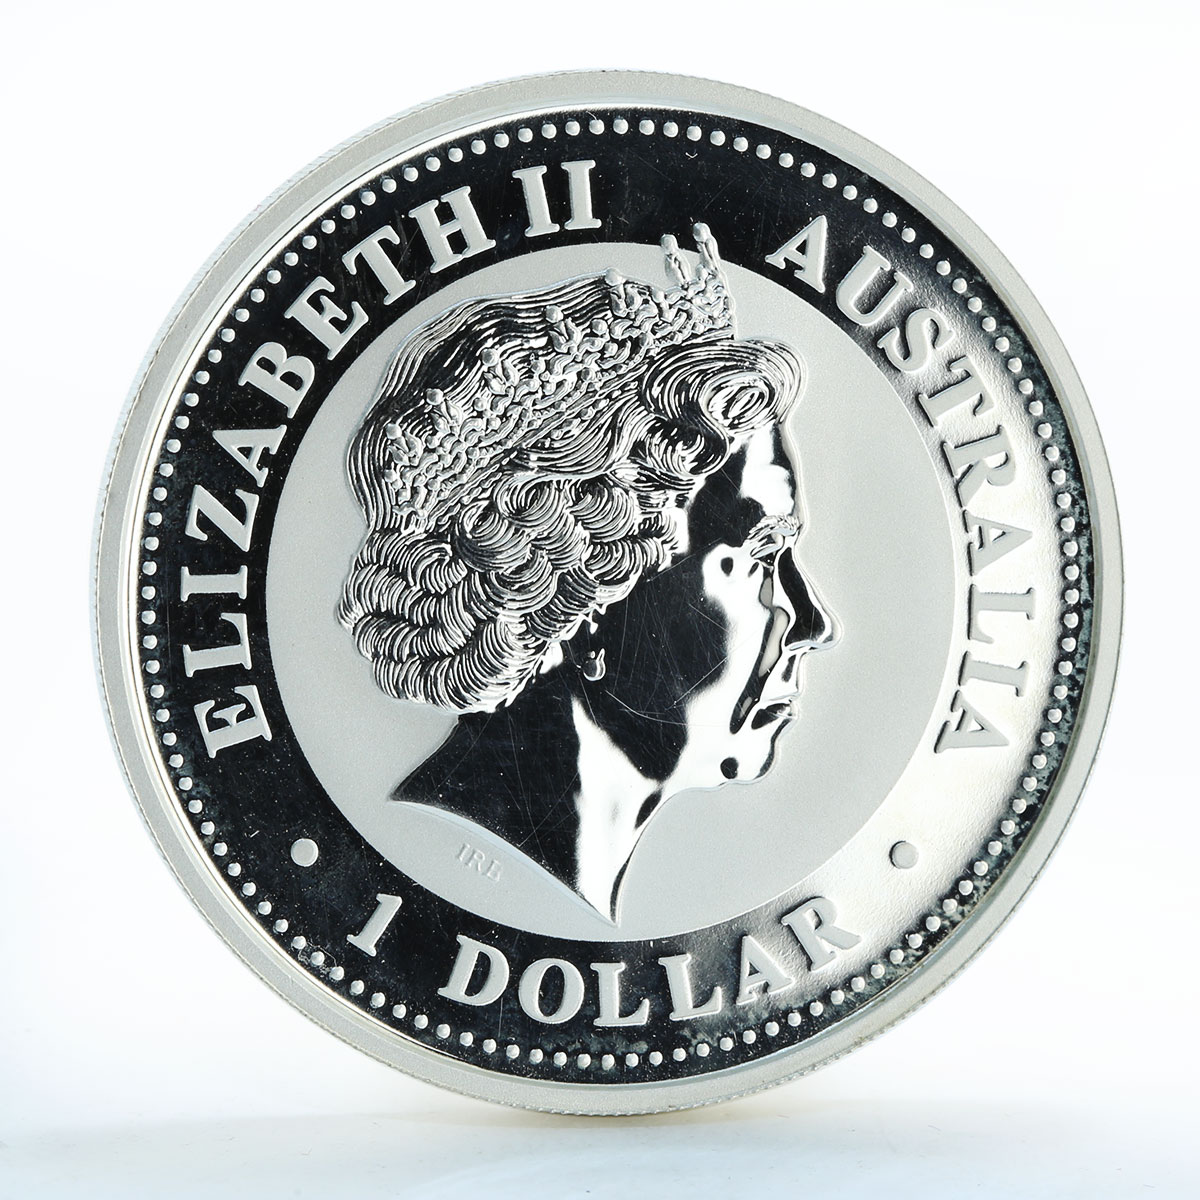 Australia 1 dollar Australian Kookaburra silver coin 2005